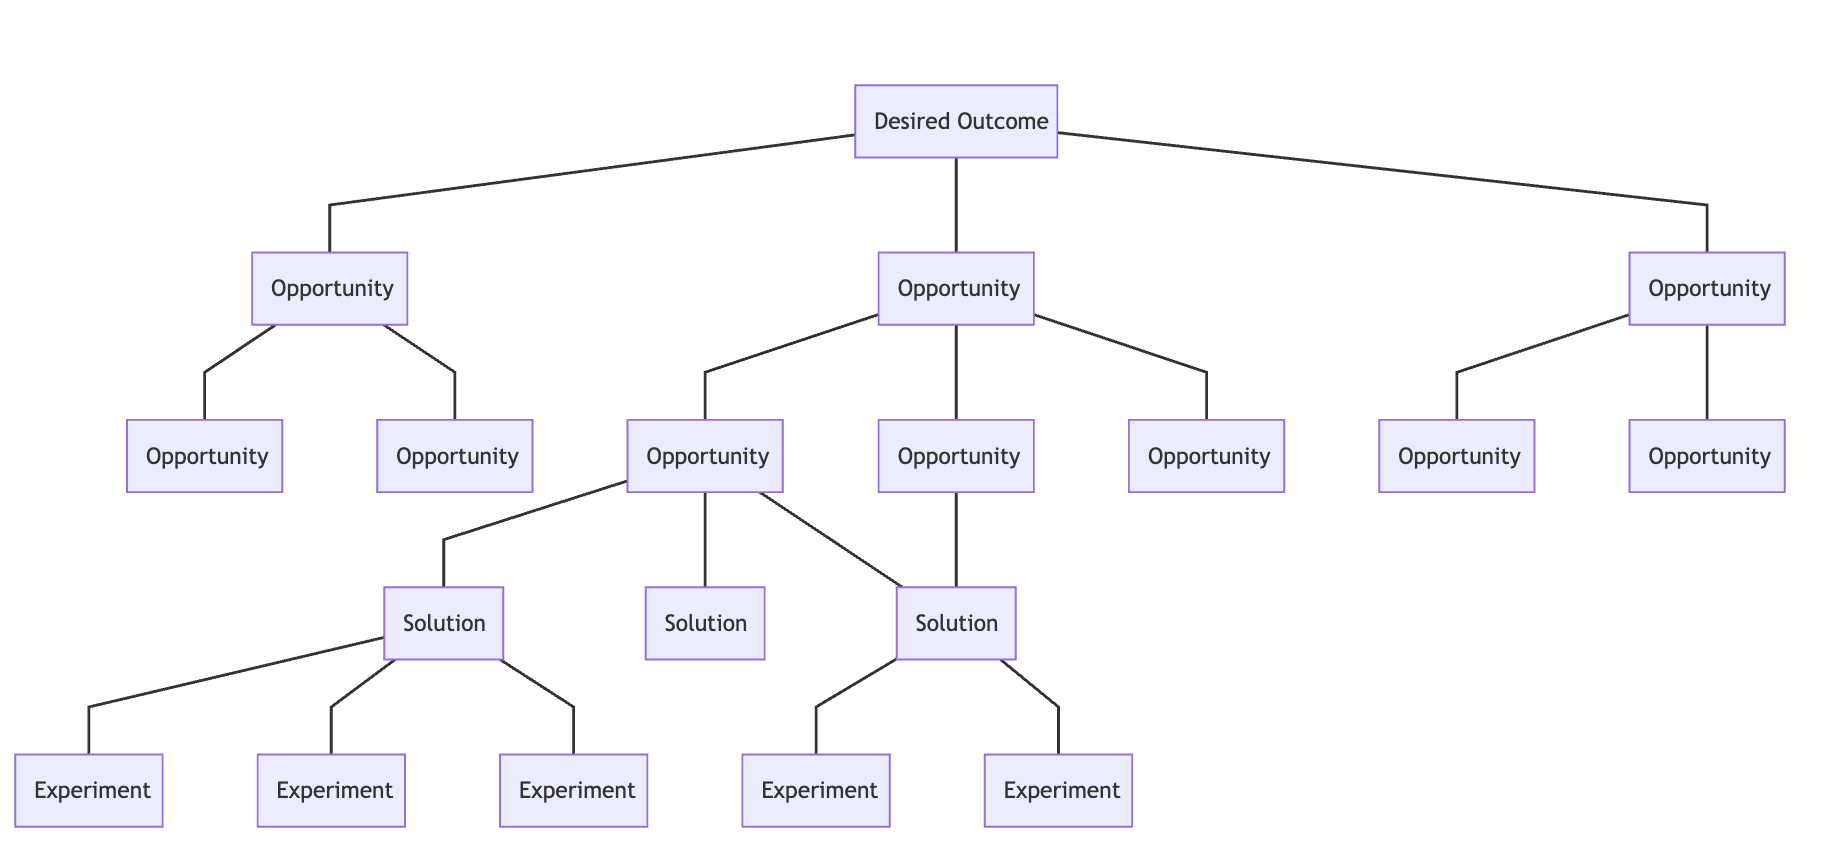 Acme's Opportunity Tree